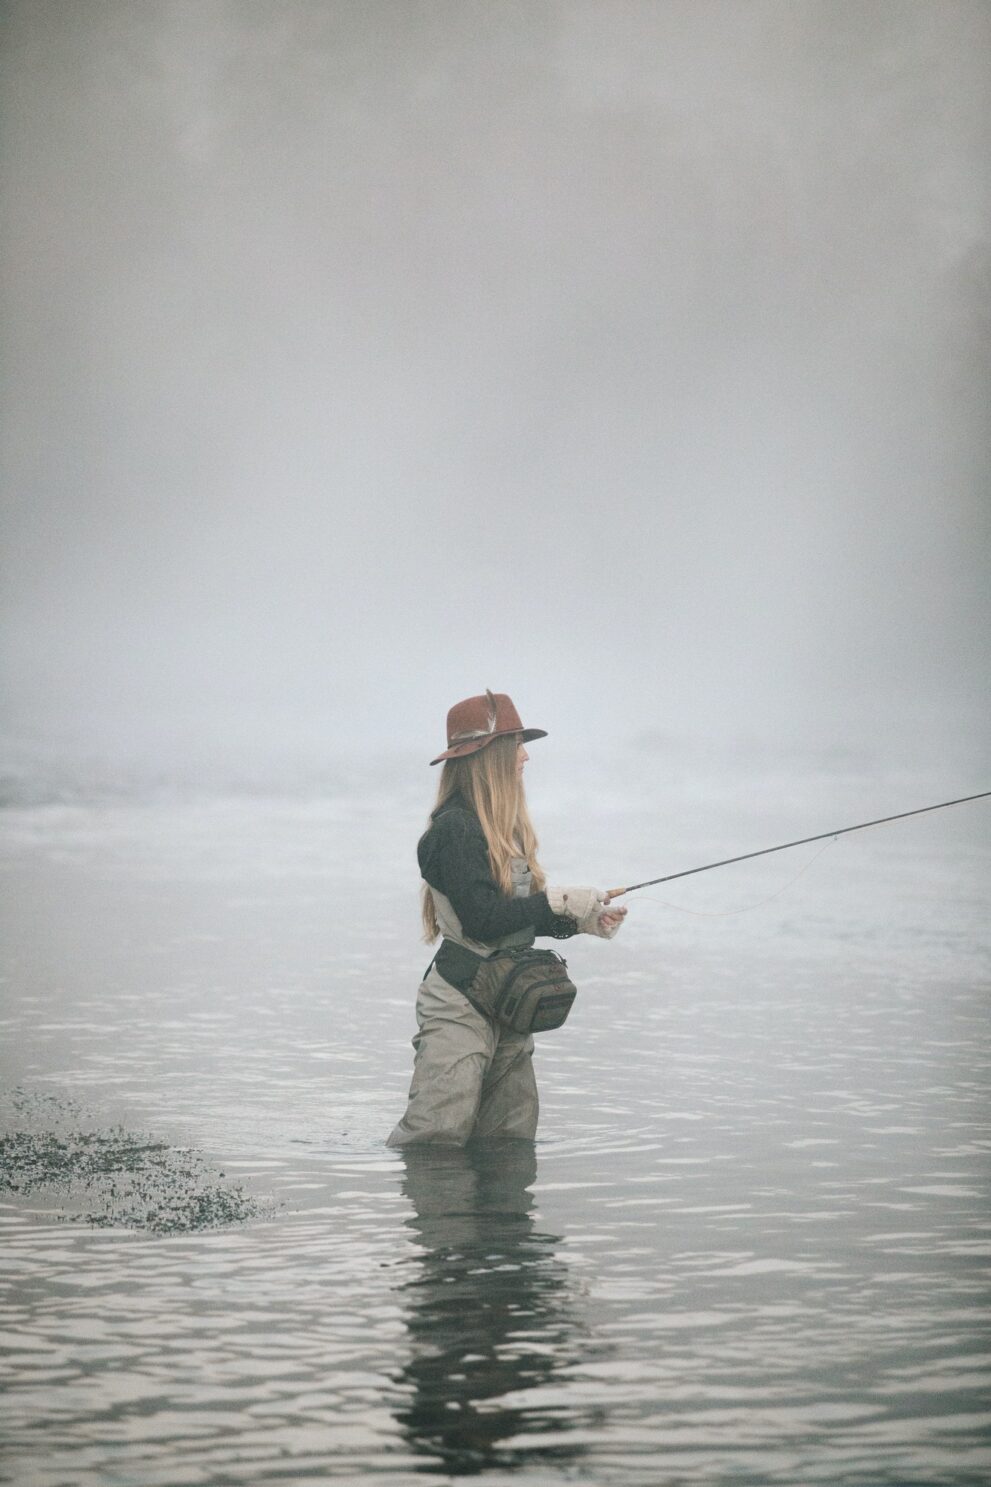 A woman fisherman flyfishing, standing in waders in thigh deep water.